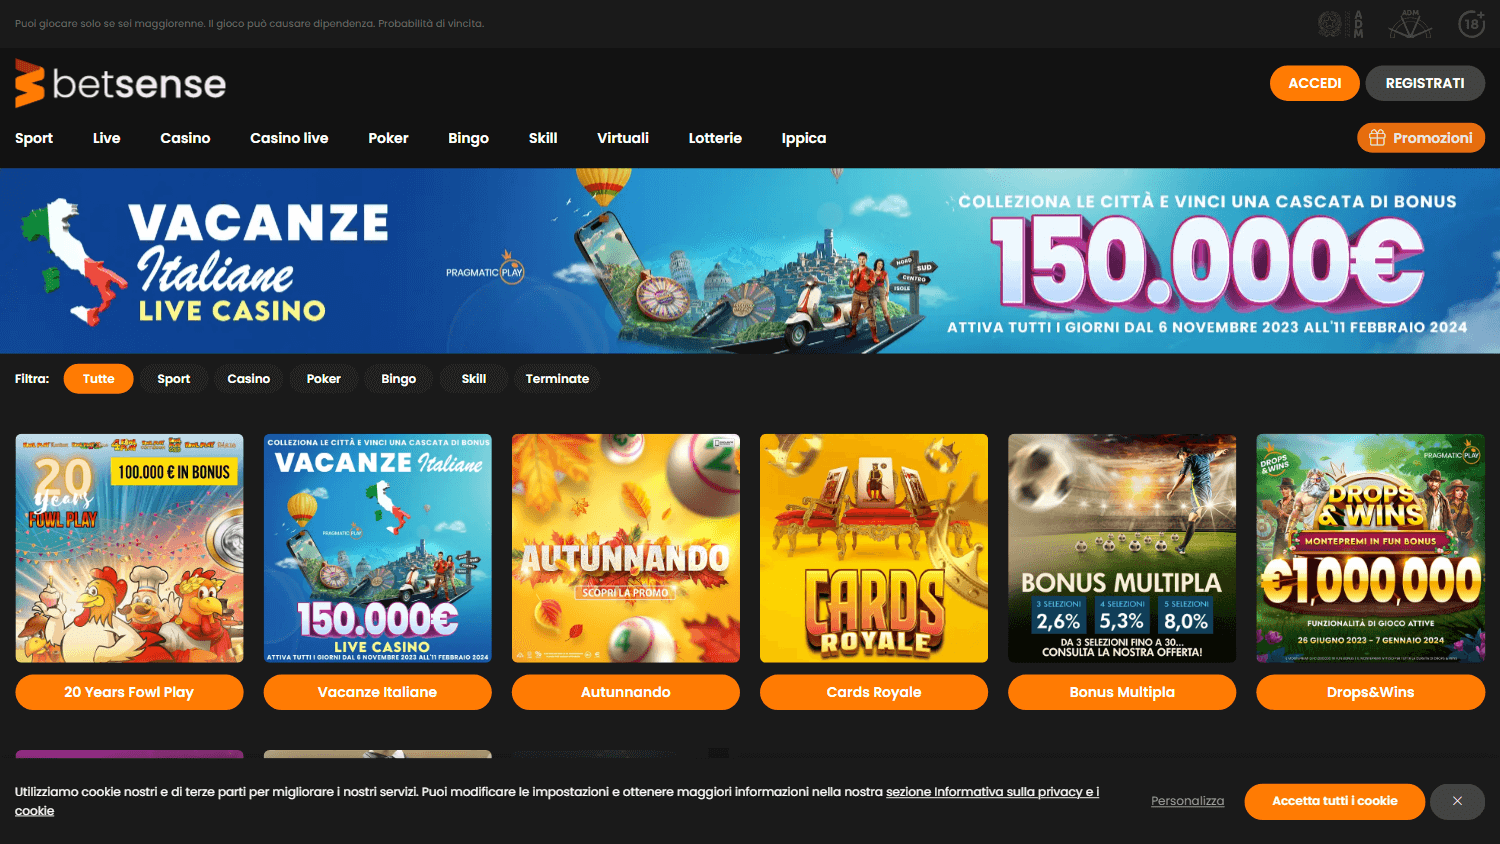 betsense_casino_promotions_desktop